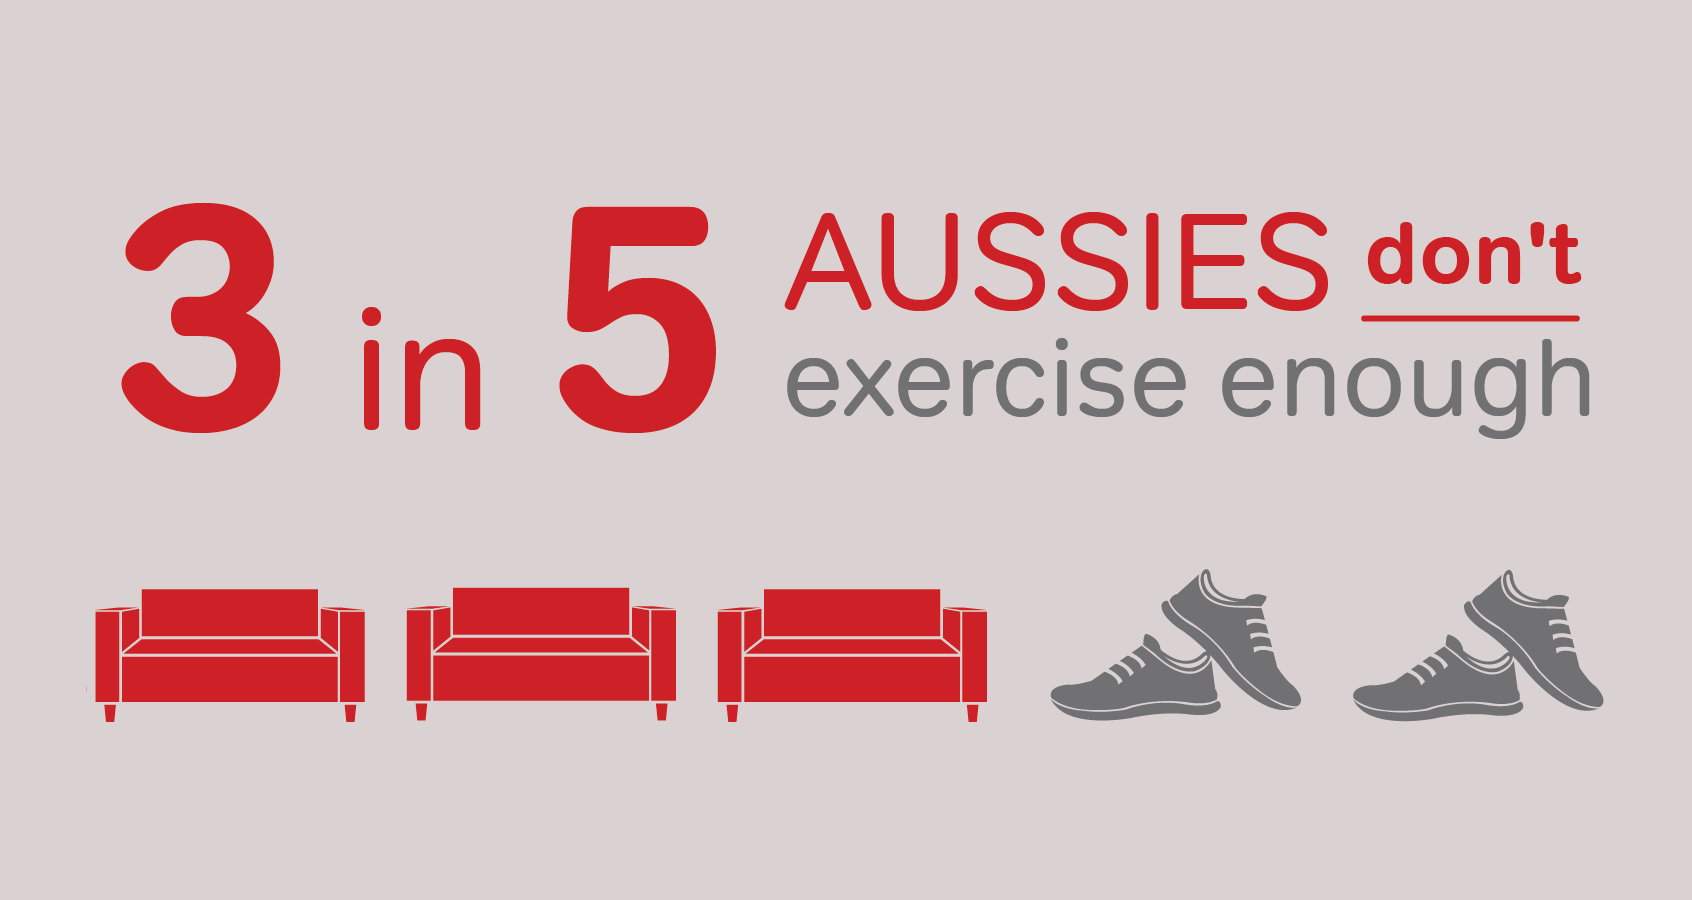 3 in 5 Australian's don't exercise enough